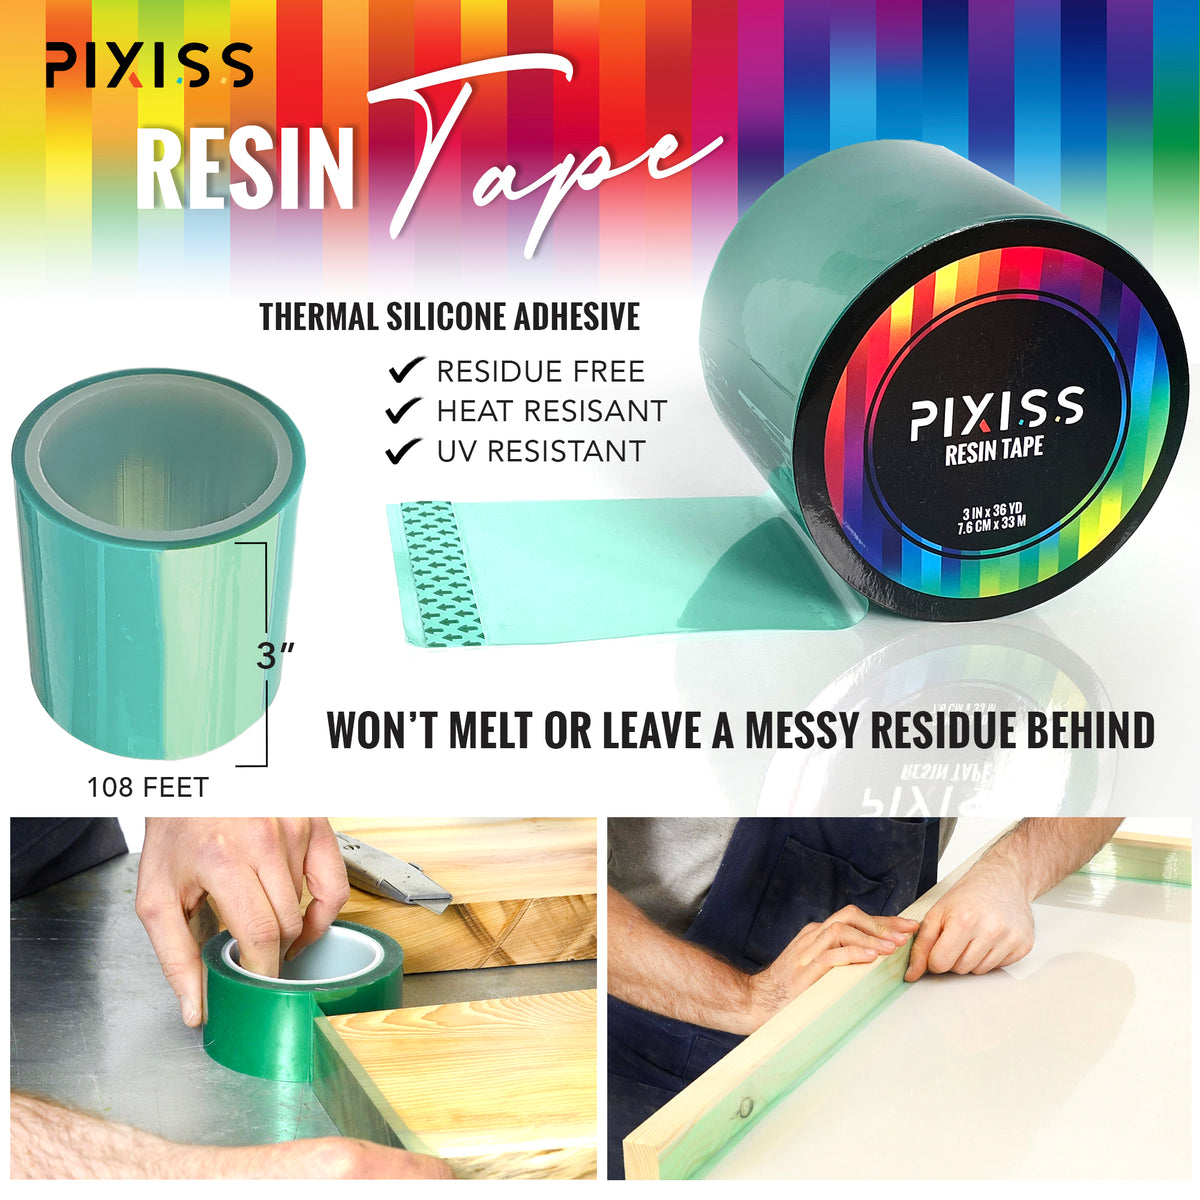 PIXISS Resin Tape – Pixiss